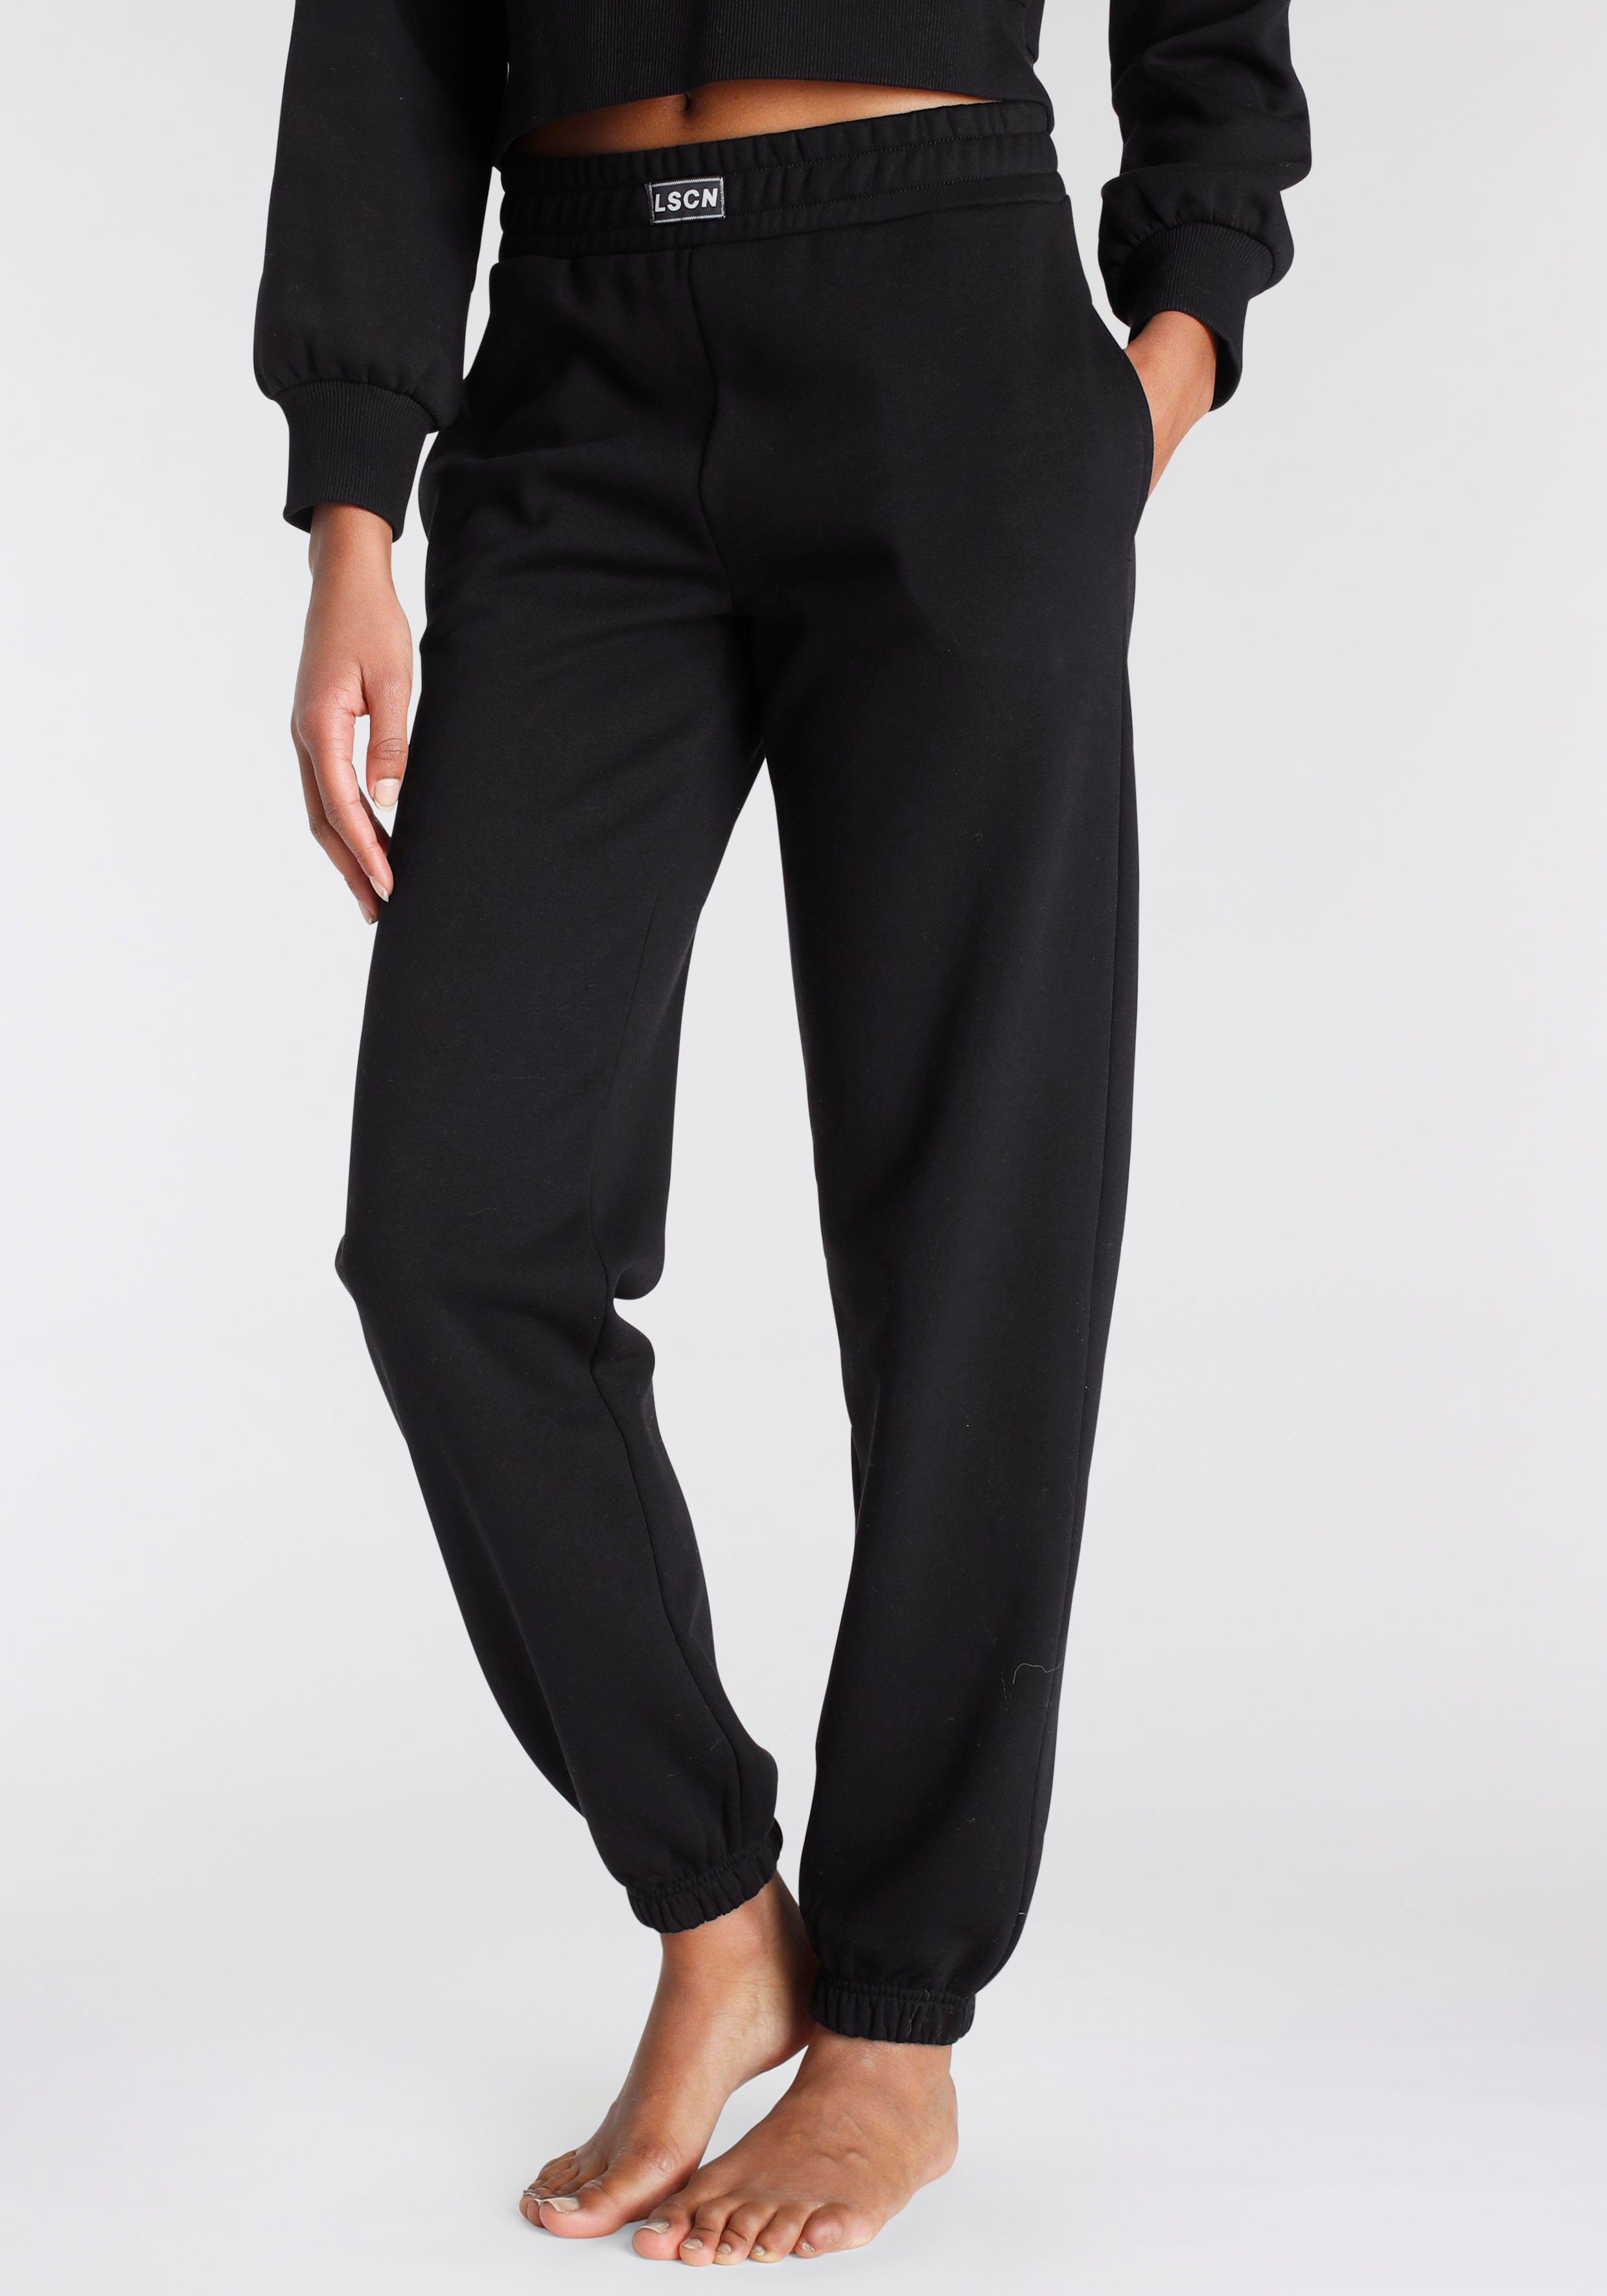 LASCANA Jogginghose mit geripptem Hosenbund, Loungewear, Loungeanzug schwarz